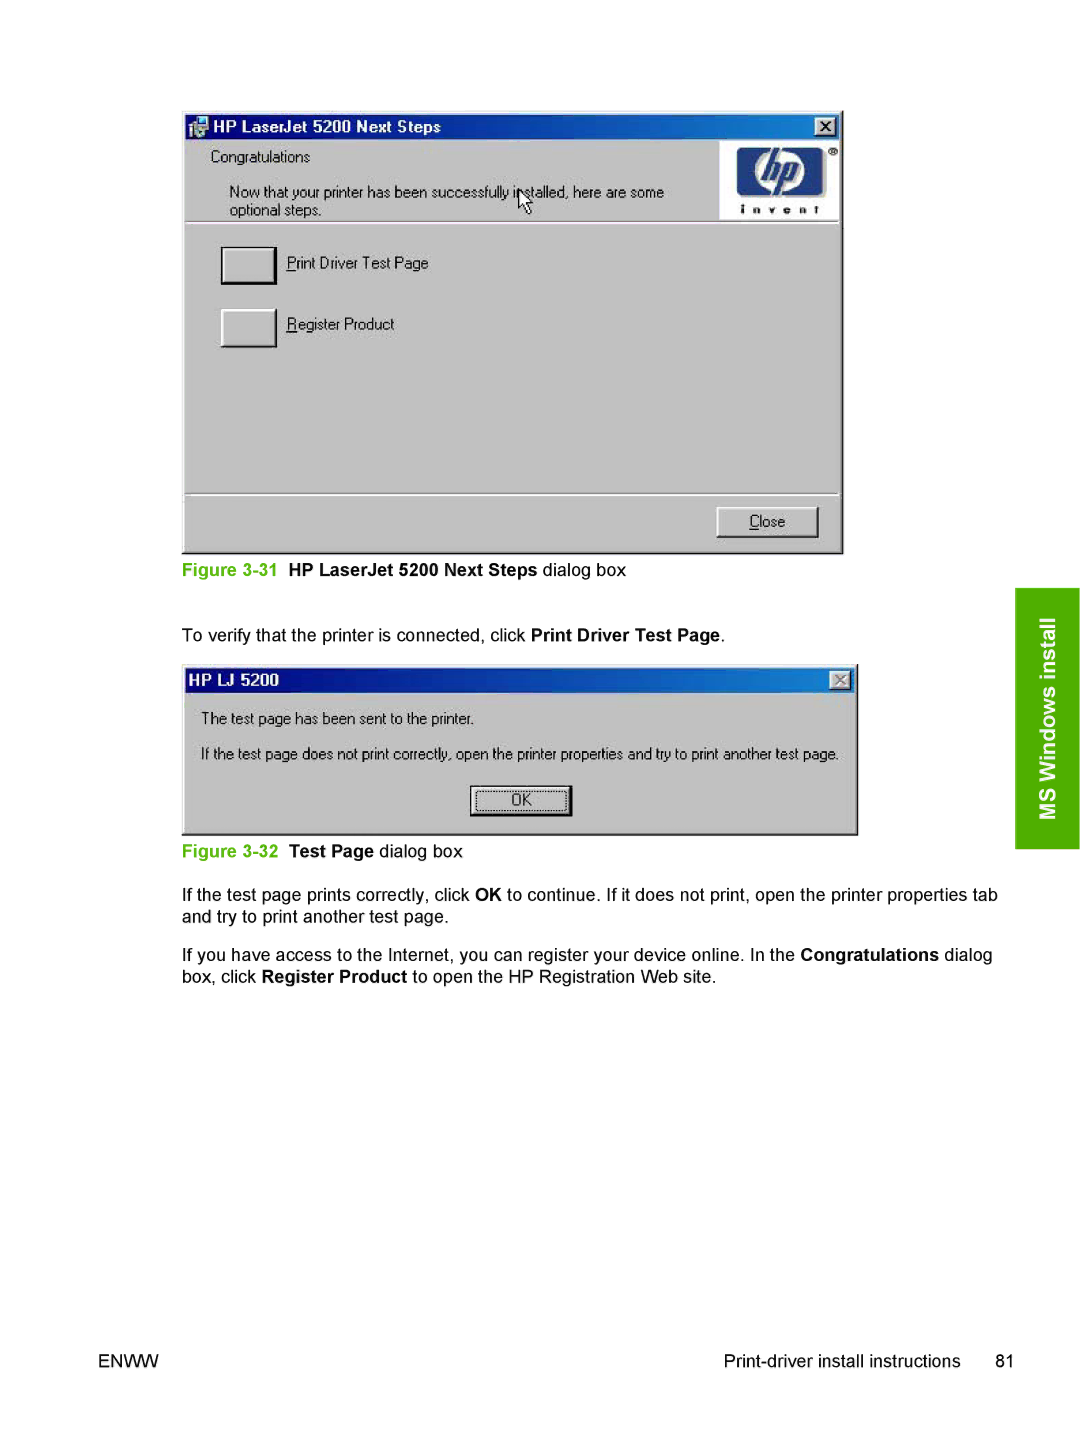 HP 5200L manual Test Page dialog box 